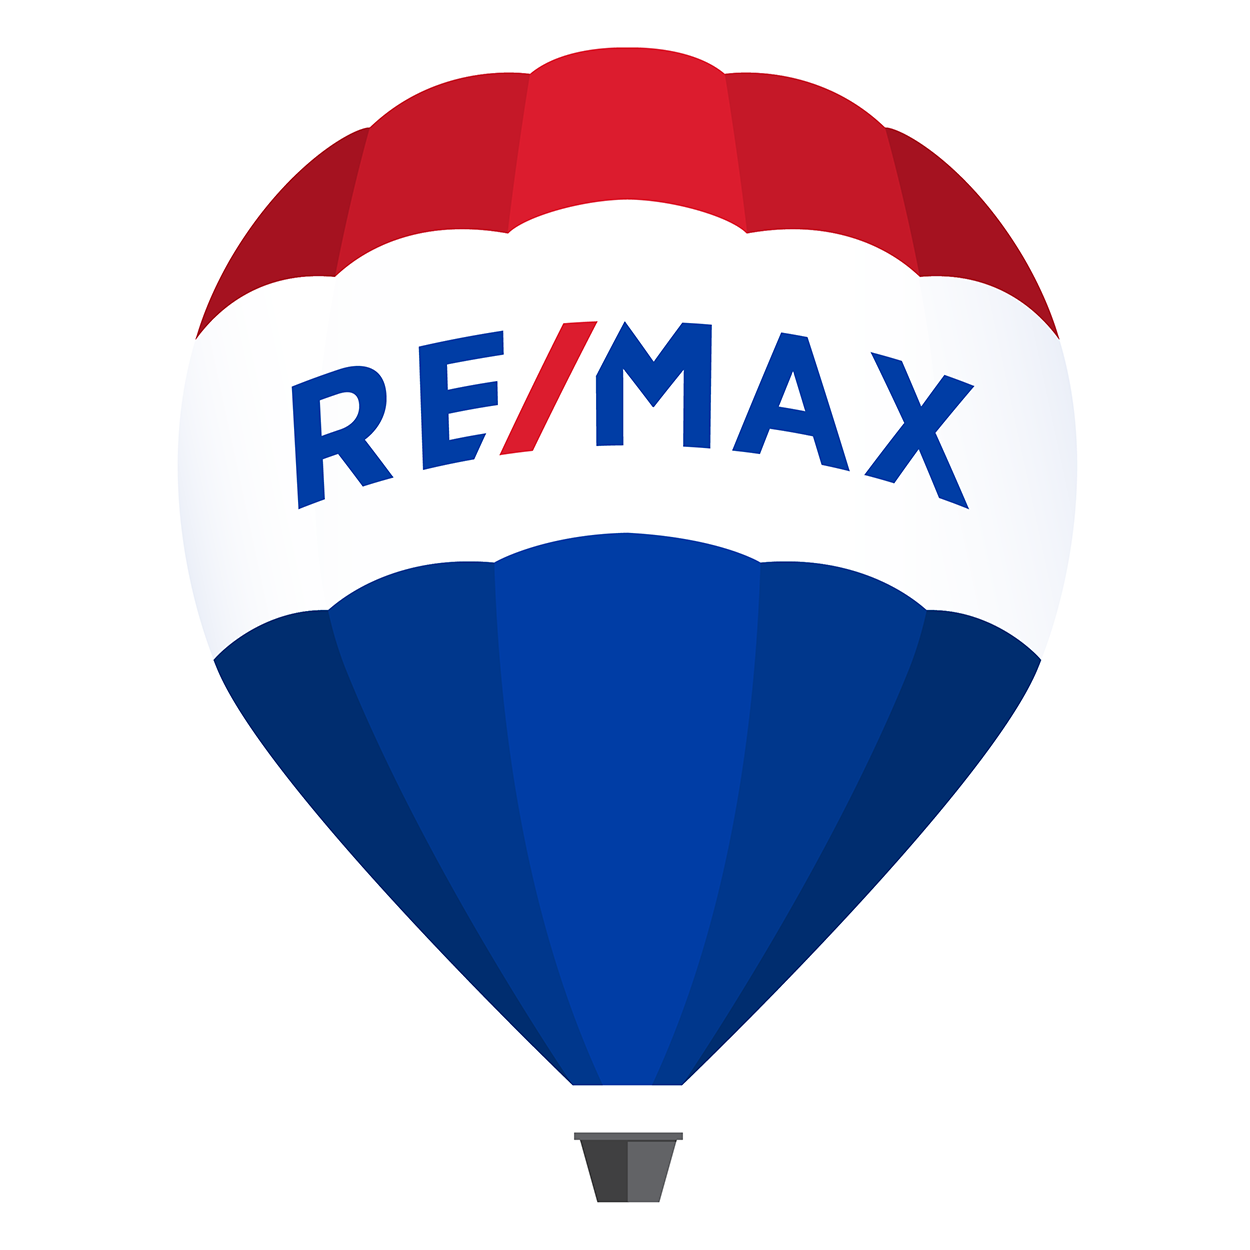 Remax Germany